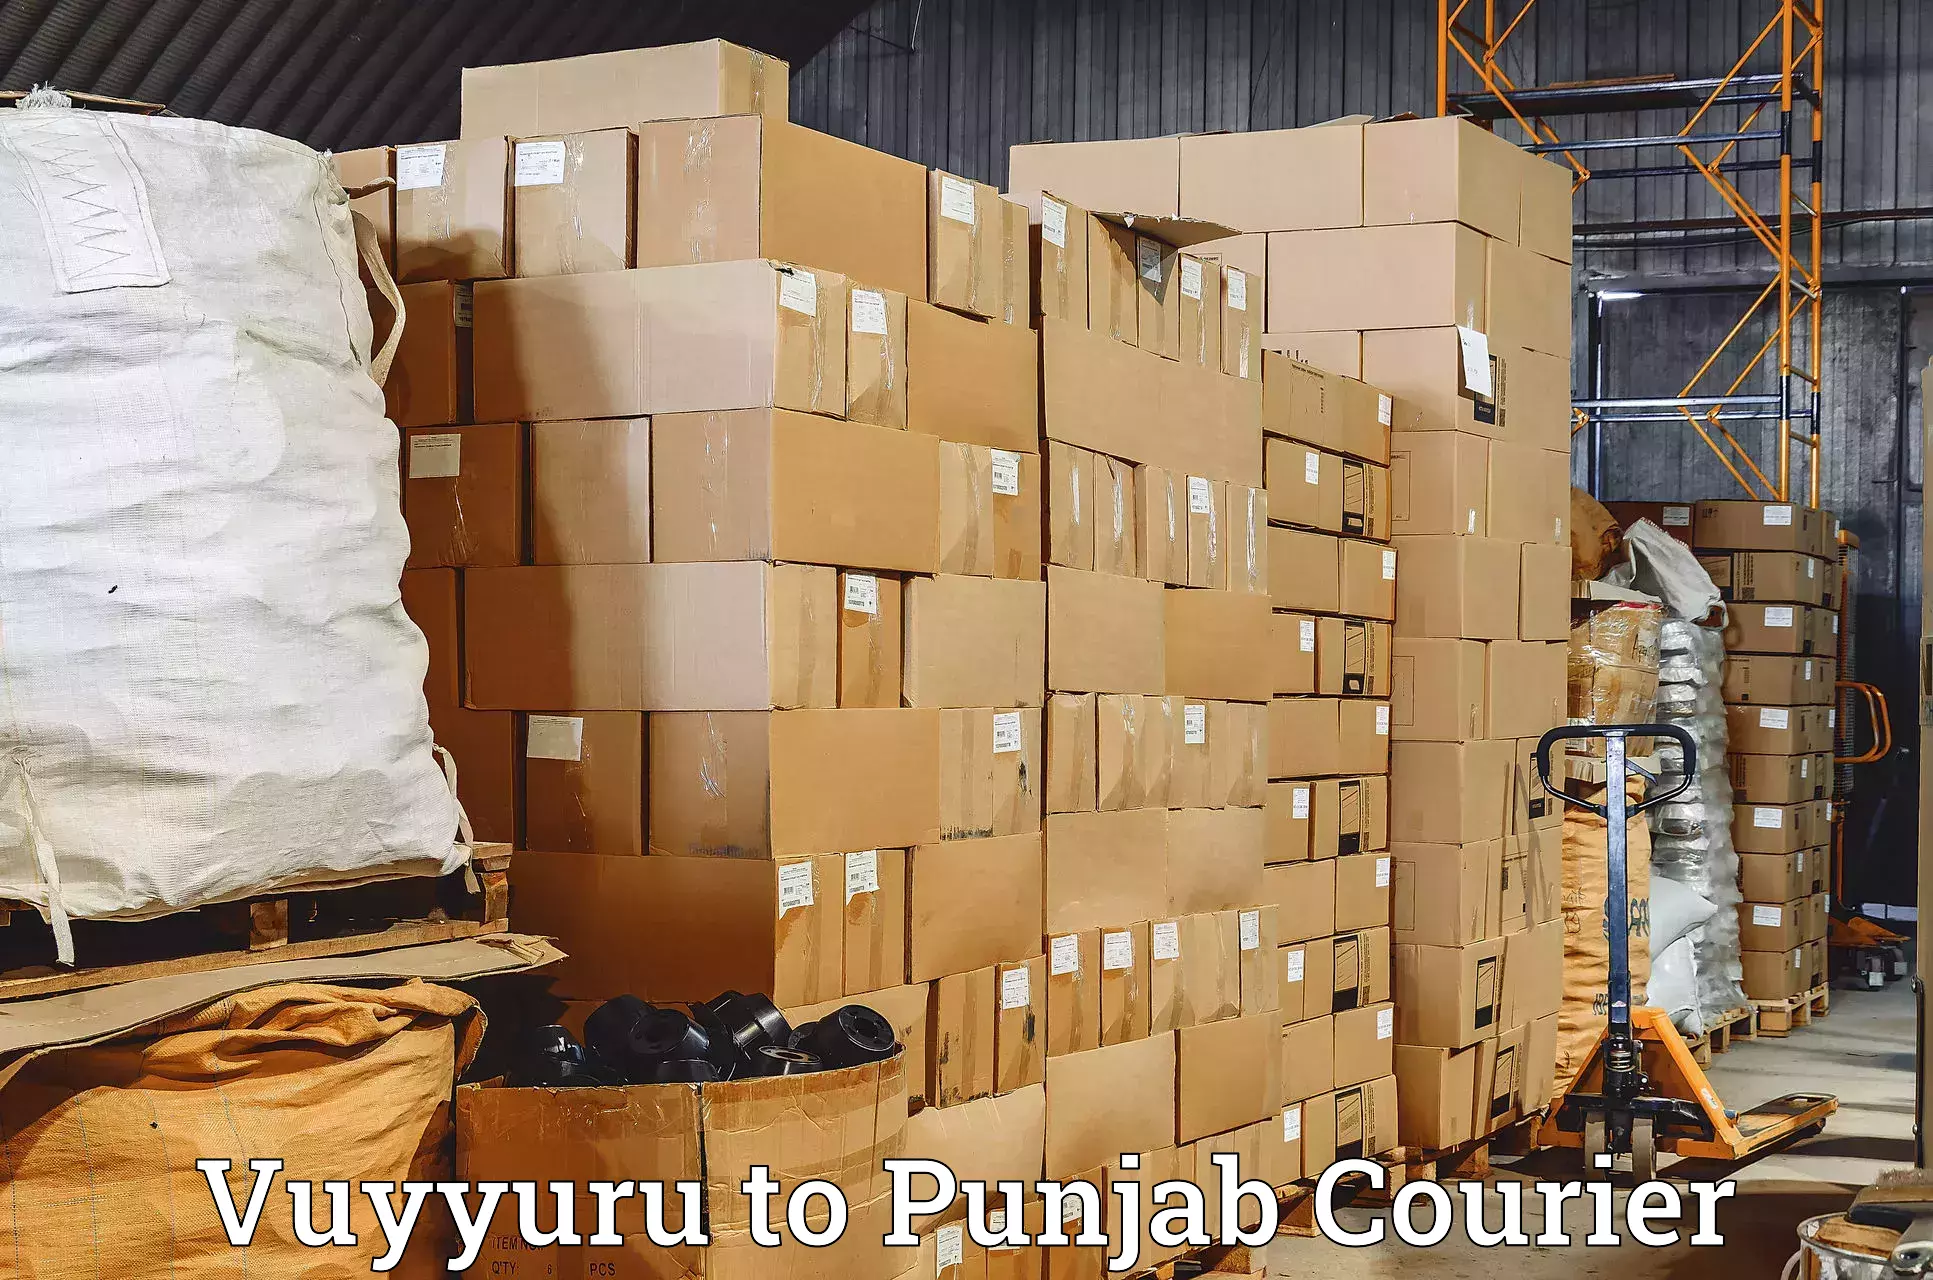 Courier service comparison Vuyyuru to Talwara